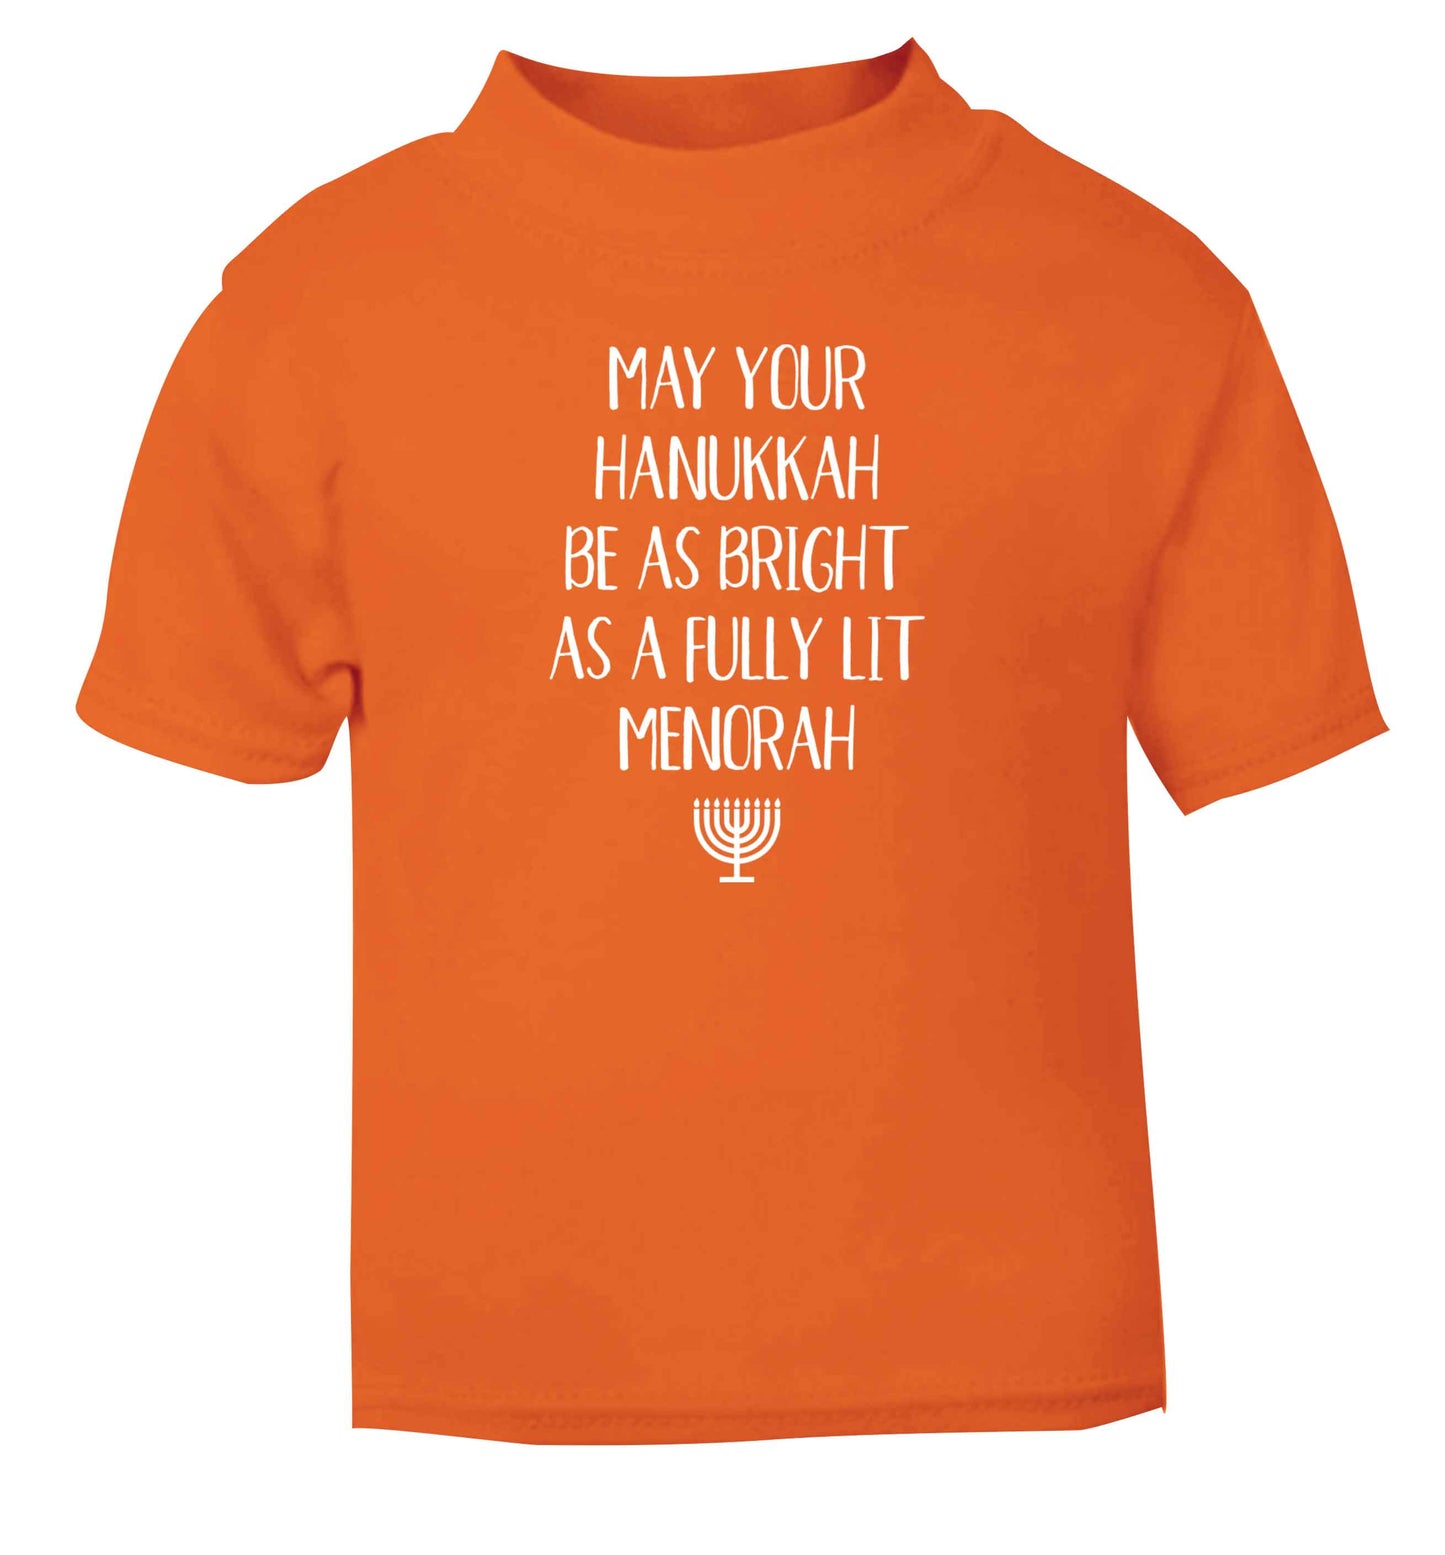 May your hanukkah be as bright as a fully lit menorah orange Baby Toddler Tshirt 2 Years